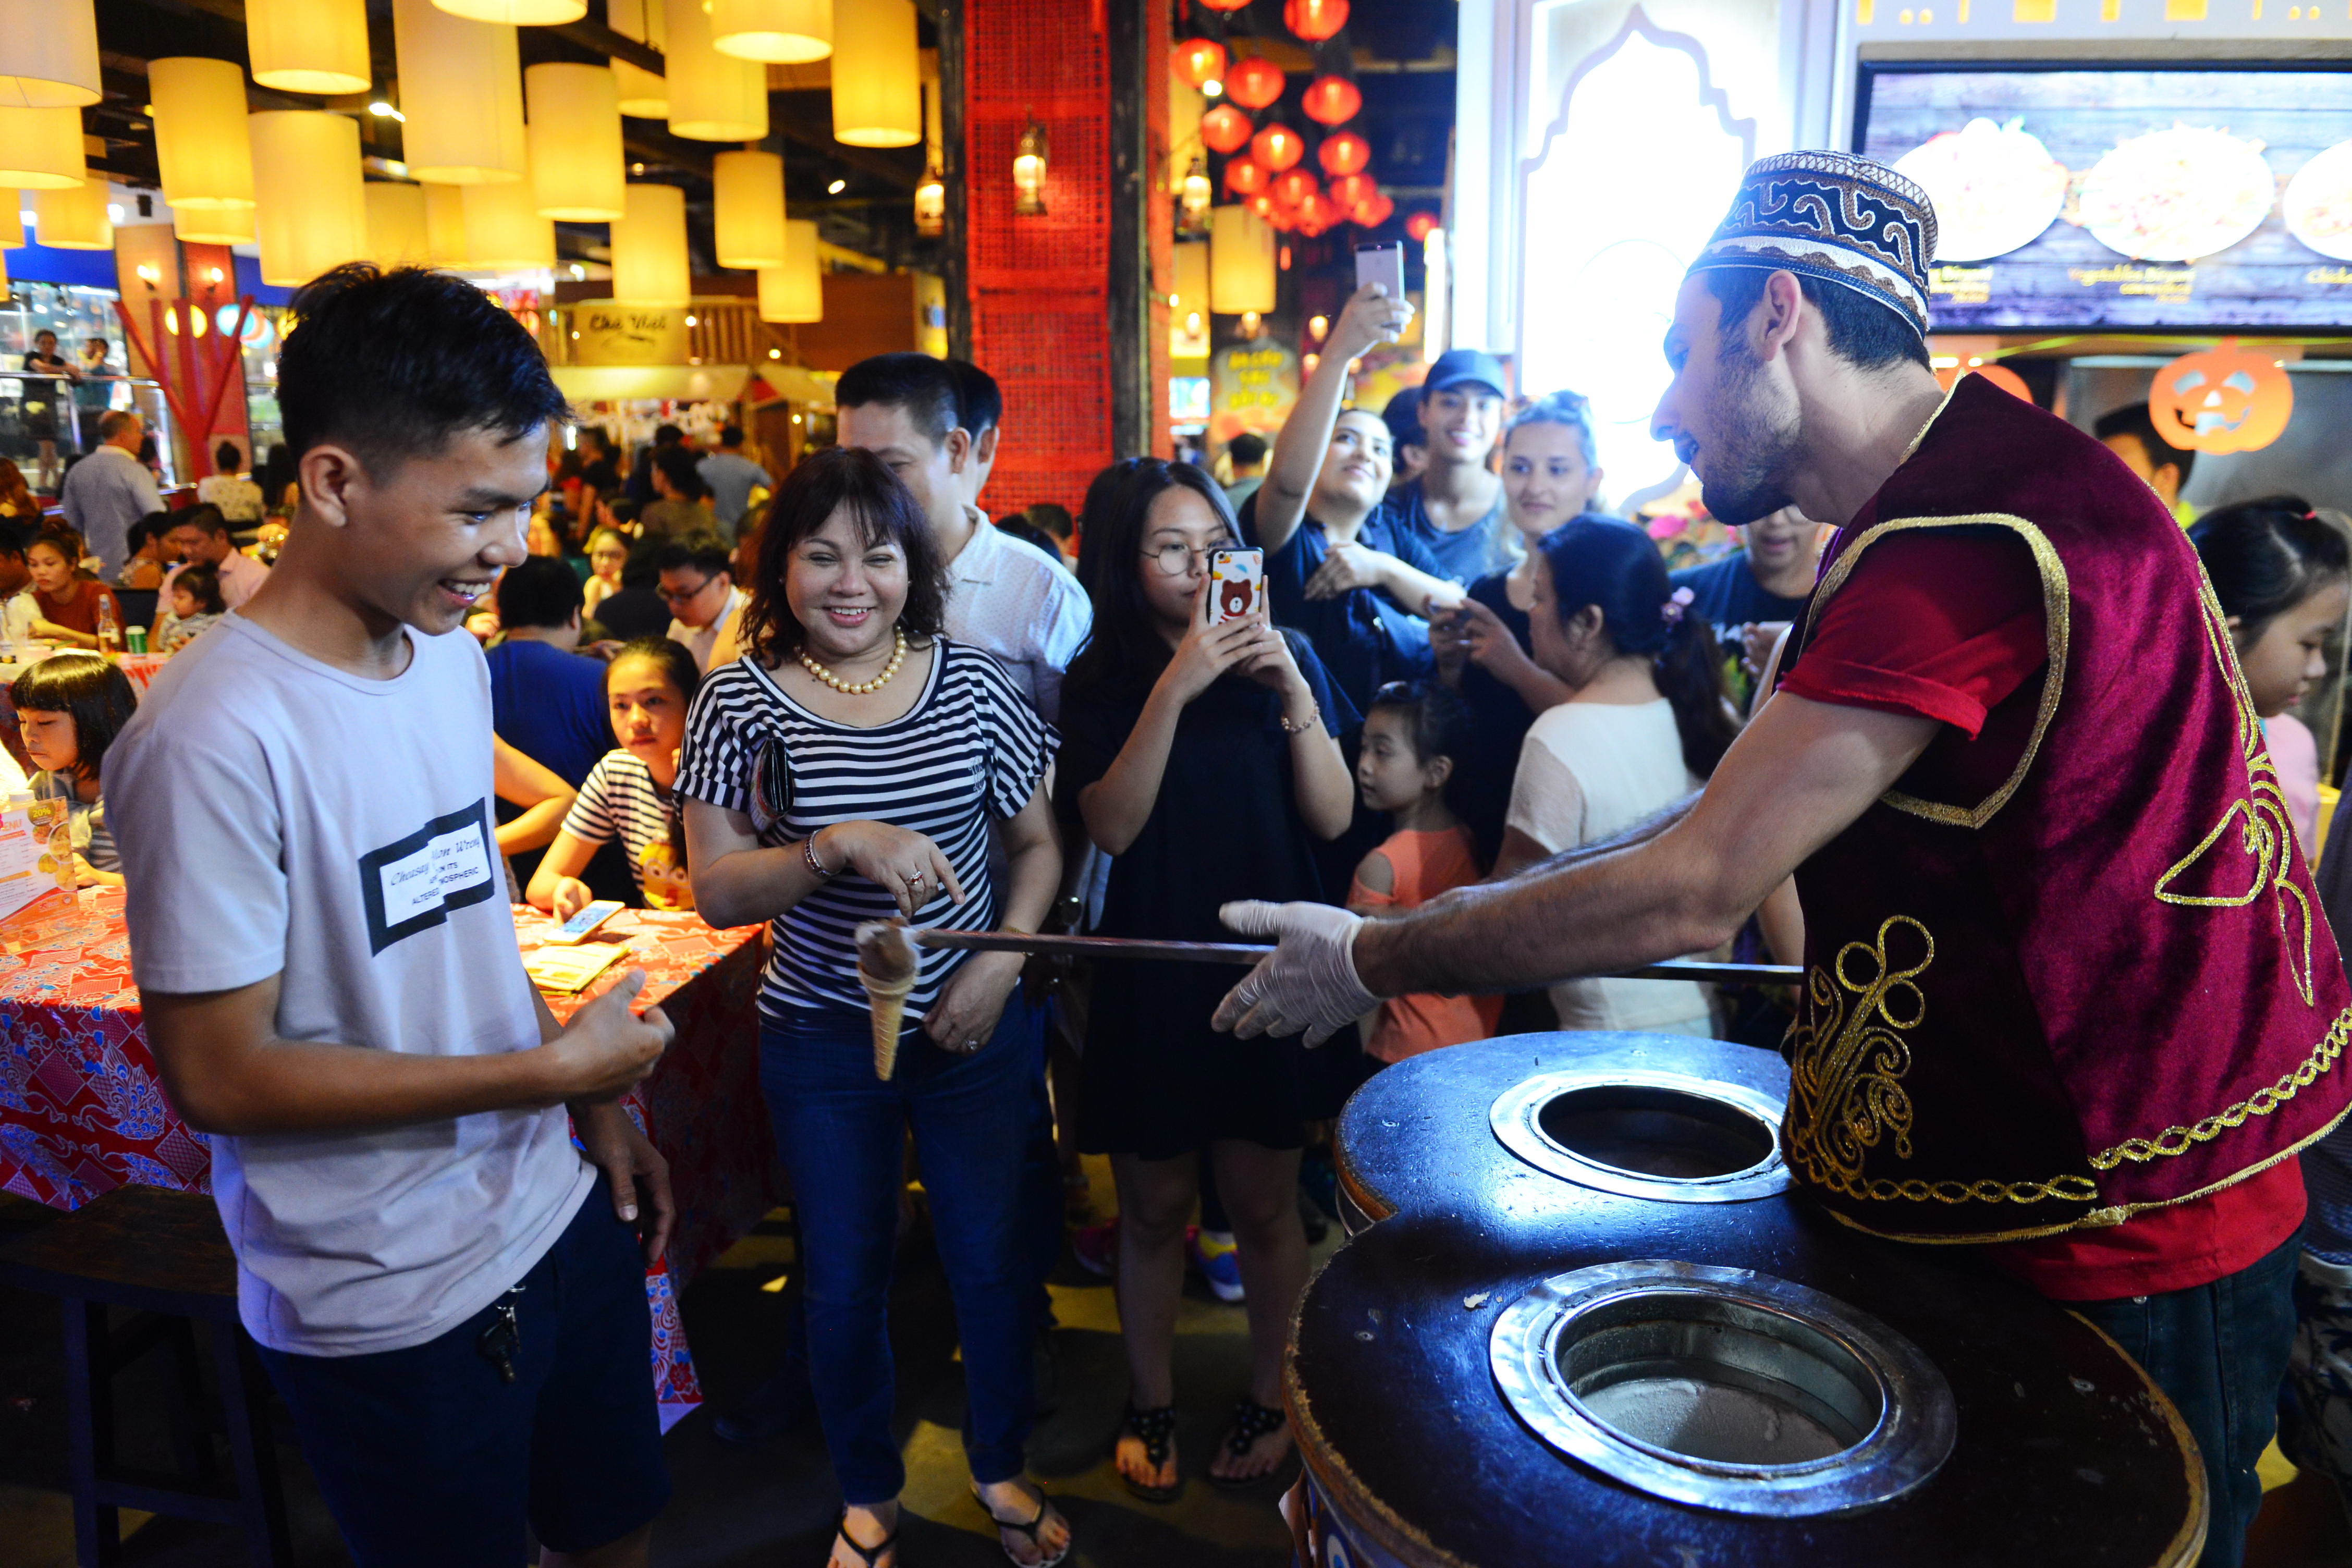 Experience diverse Asian cuisine at Saigon underground trade center